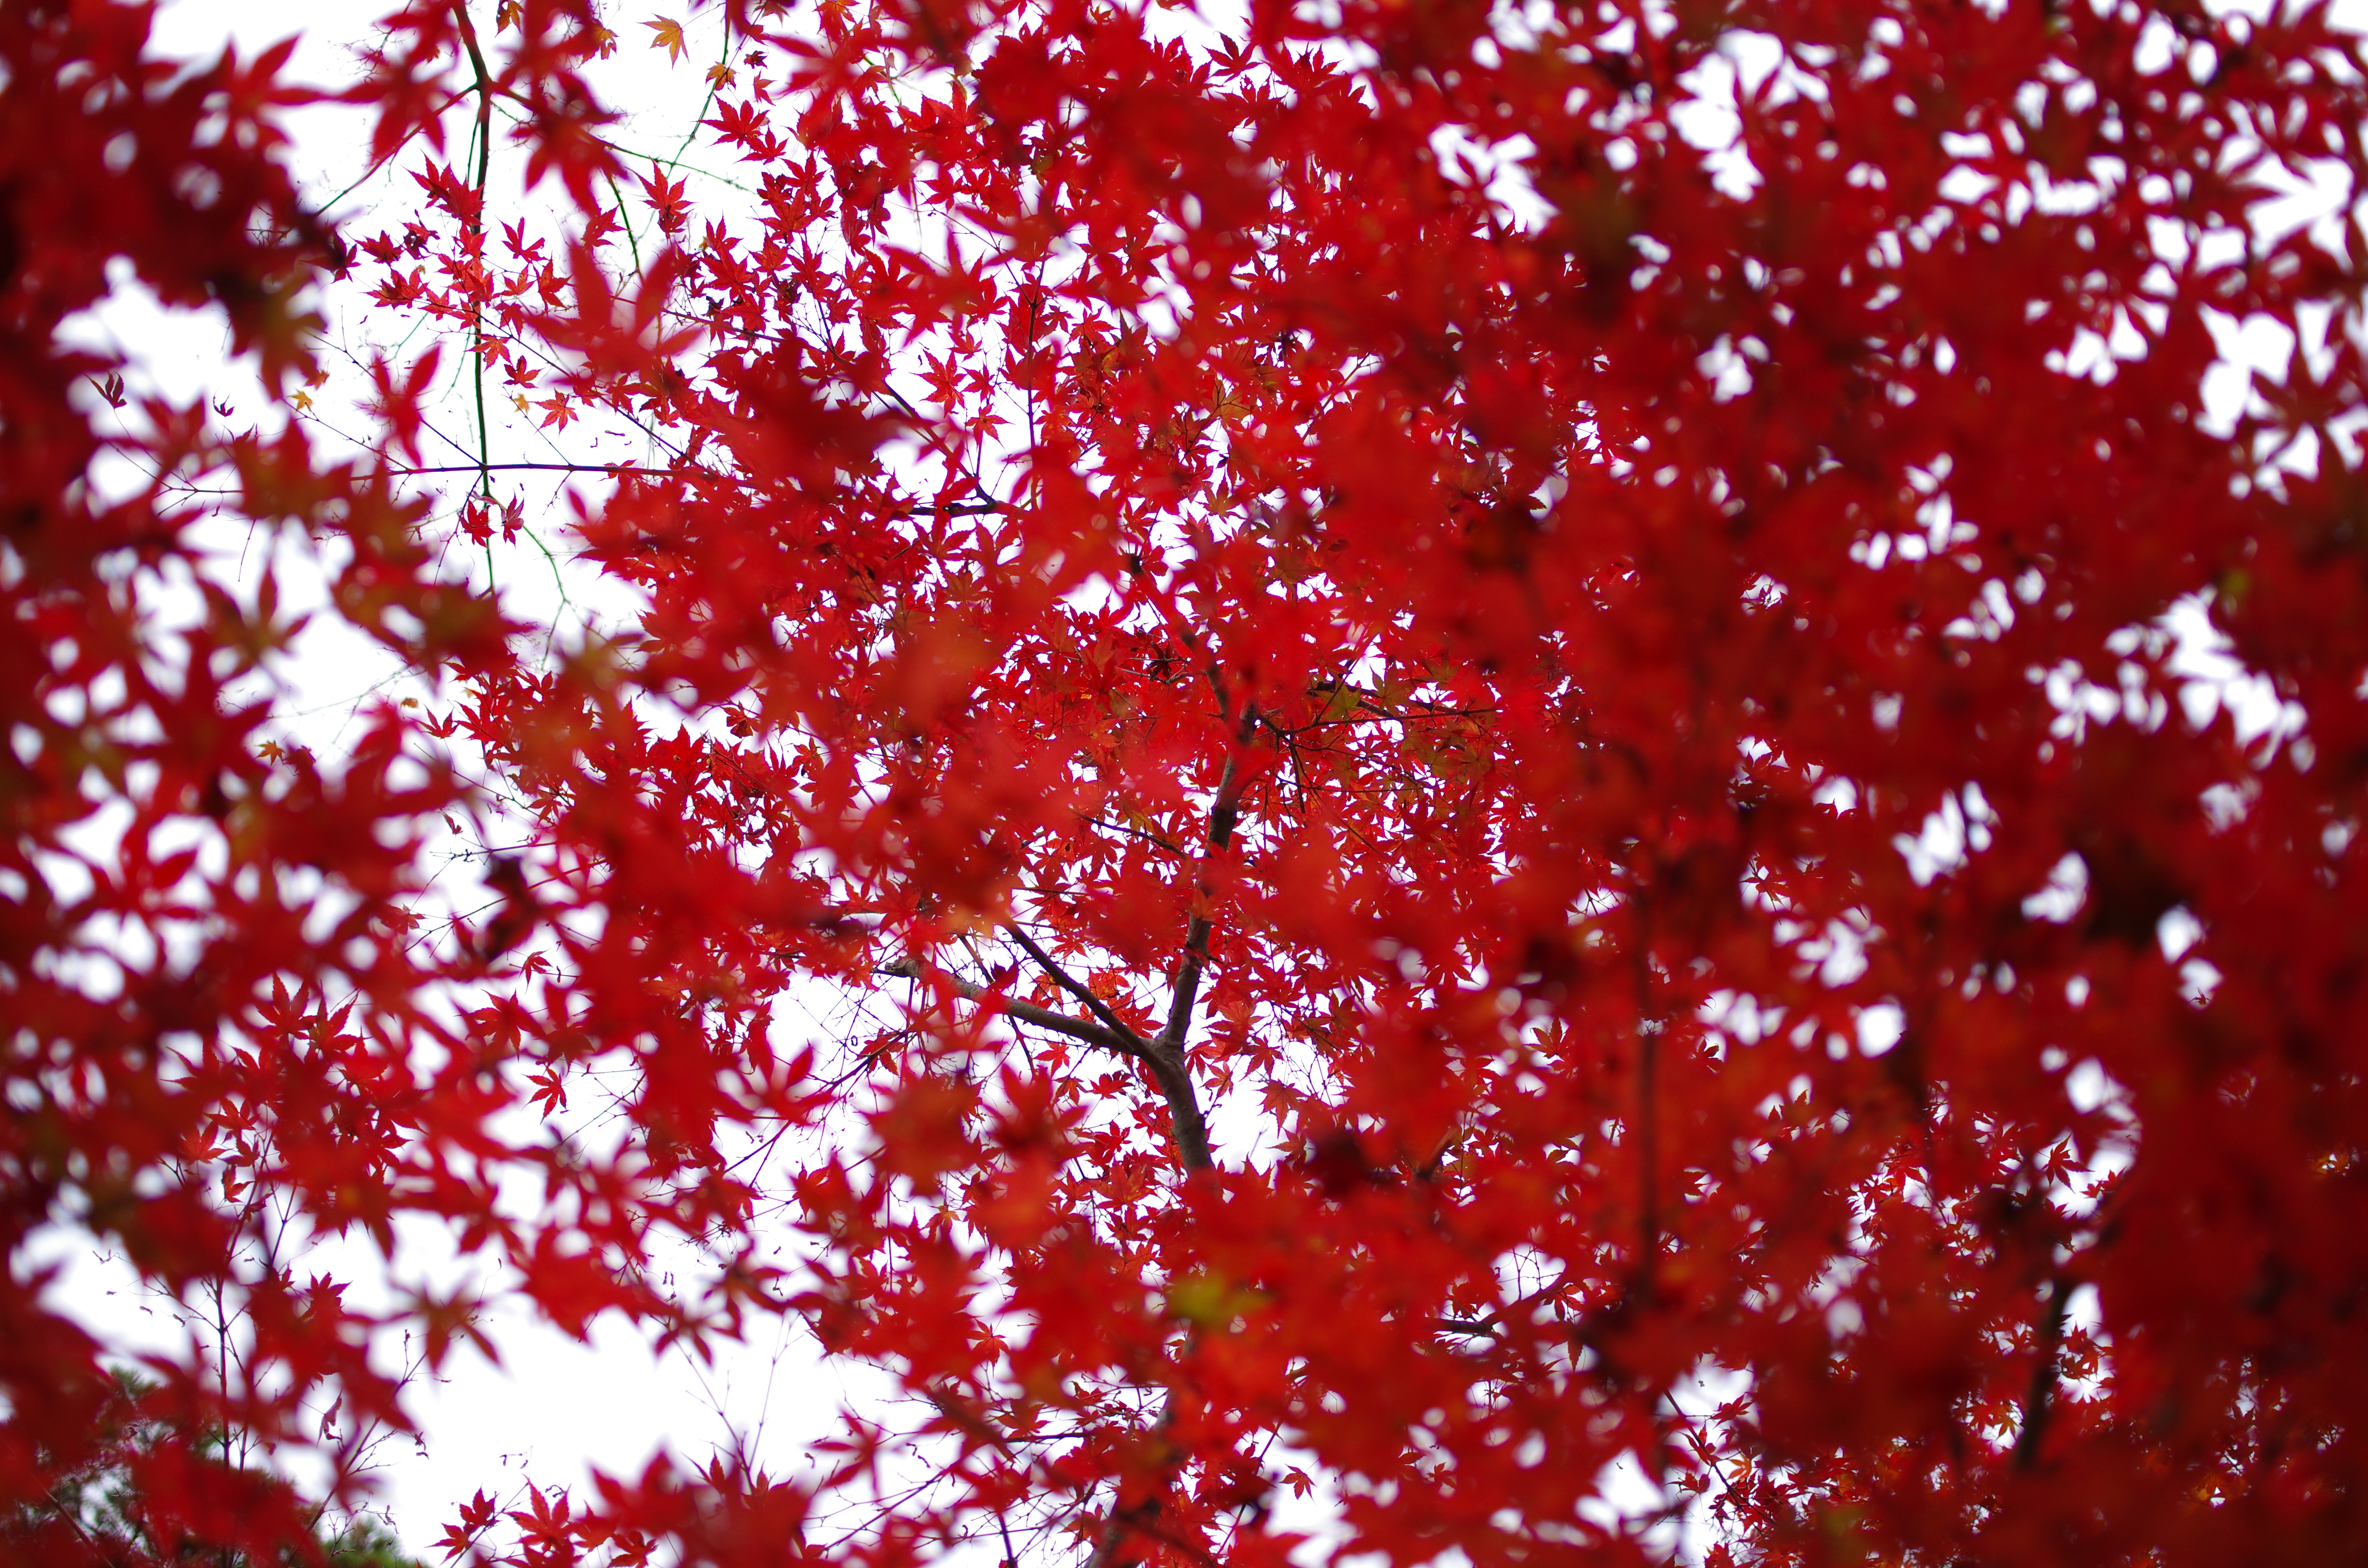 ■PENTAX K-5/DA35mmF2.8 Macro Limited/絞り優先AE（F2.8）/ISO200/WB太陽光/画像仕上：風景木の真下から見上げて撮影した紅葉。本当はもっと深い赤色でしたが、逆光で撮ることによって太陽の光で葉が透けて柔らかい赤色になりました。